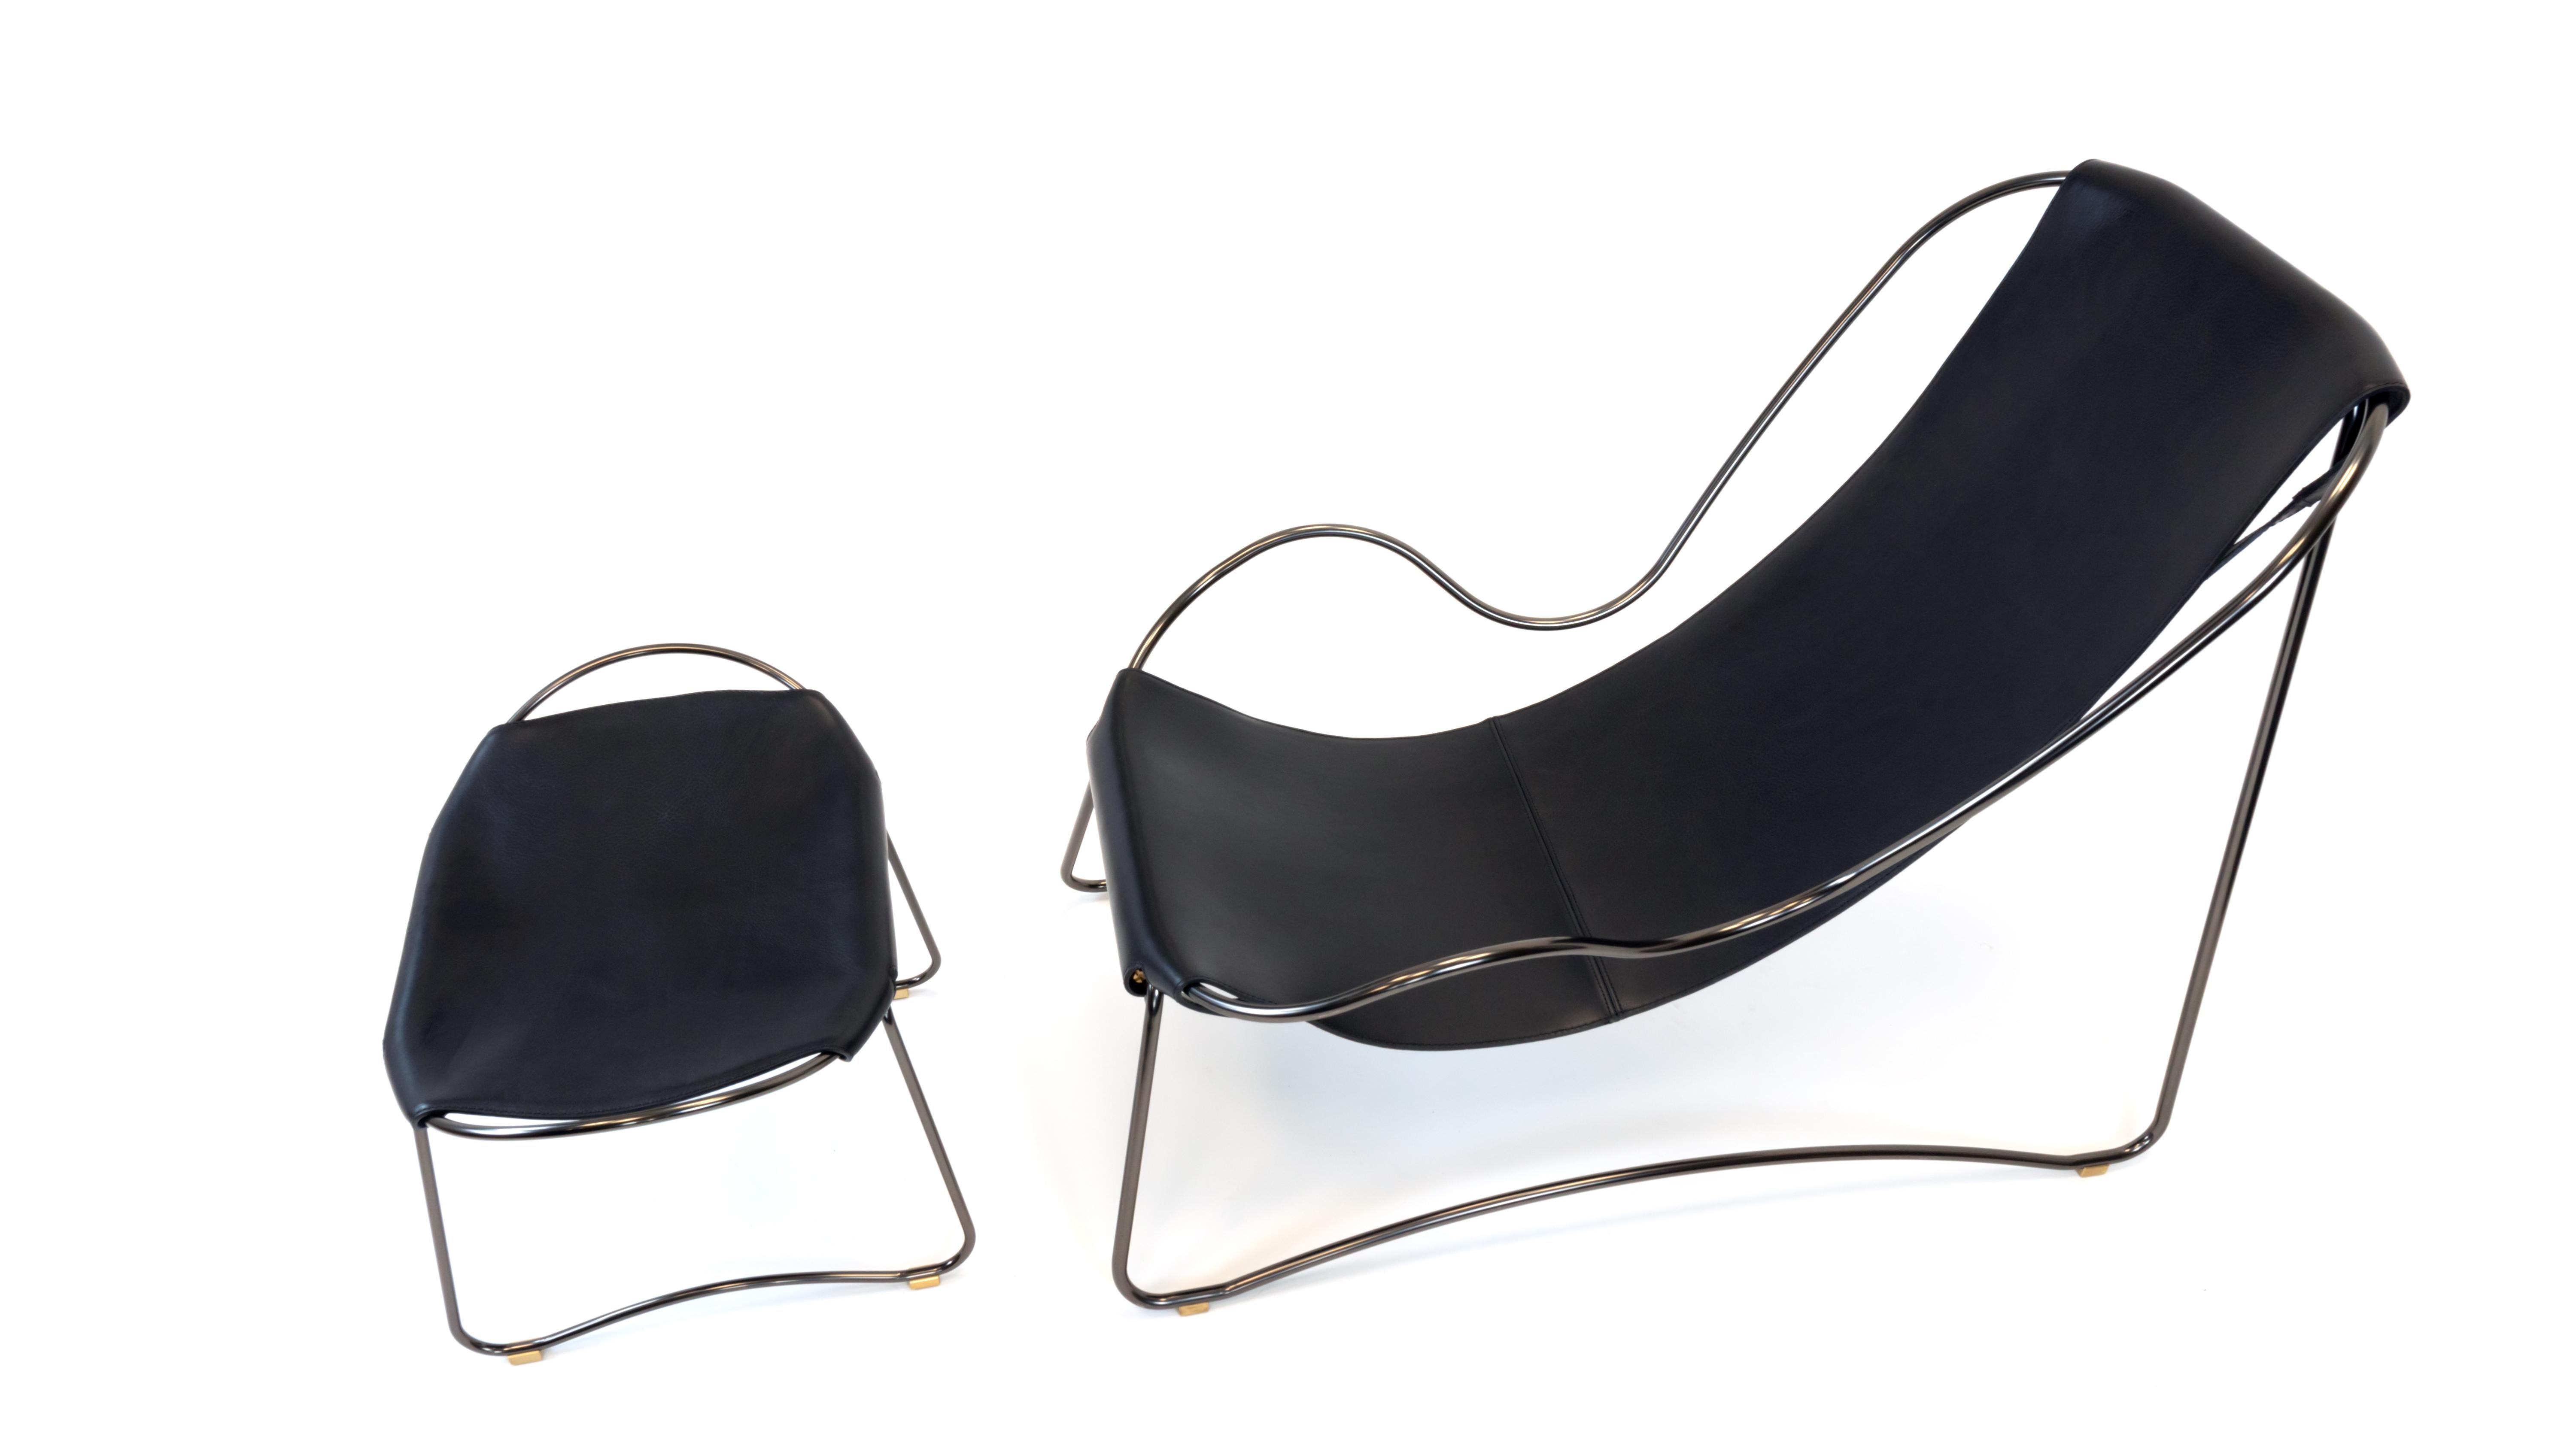 Fußhocker aus Messingstahl und schwarzem Sattelleder, moderner Stil, große Kollektion im Angebot 2